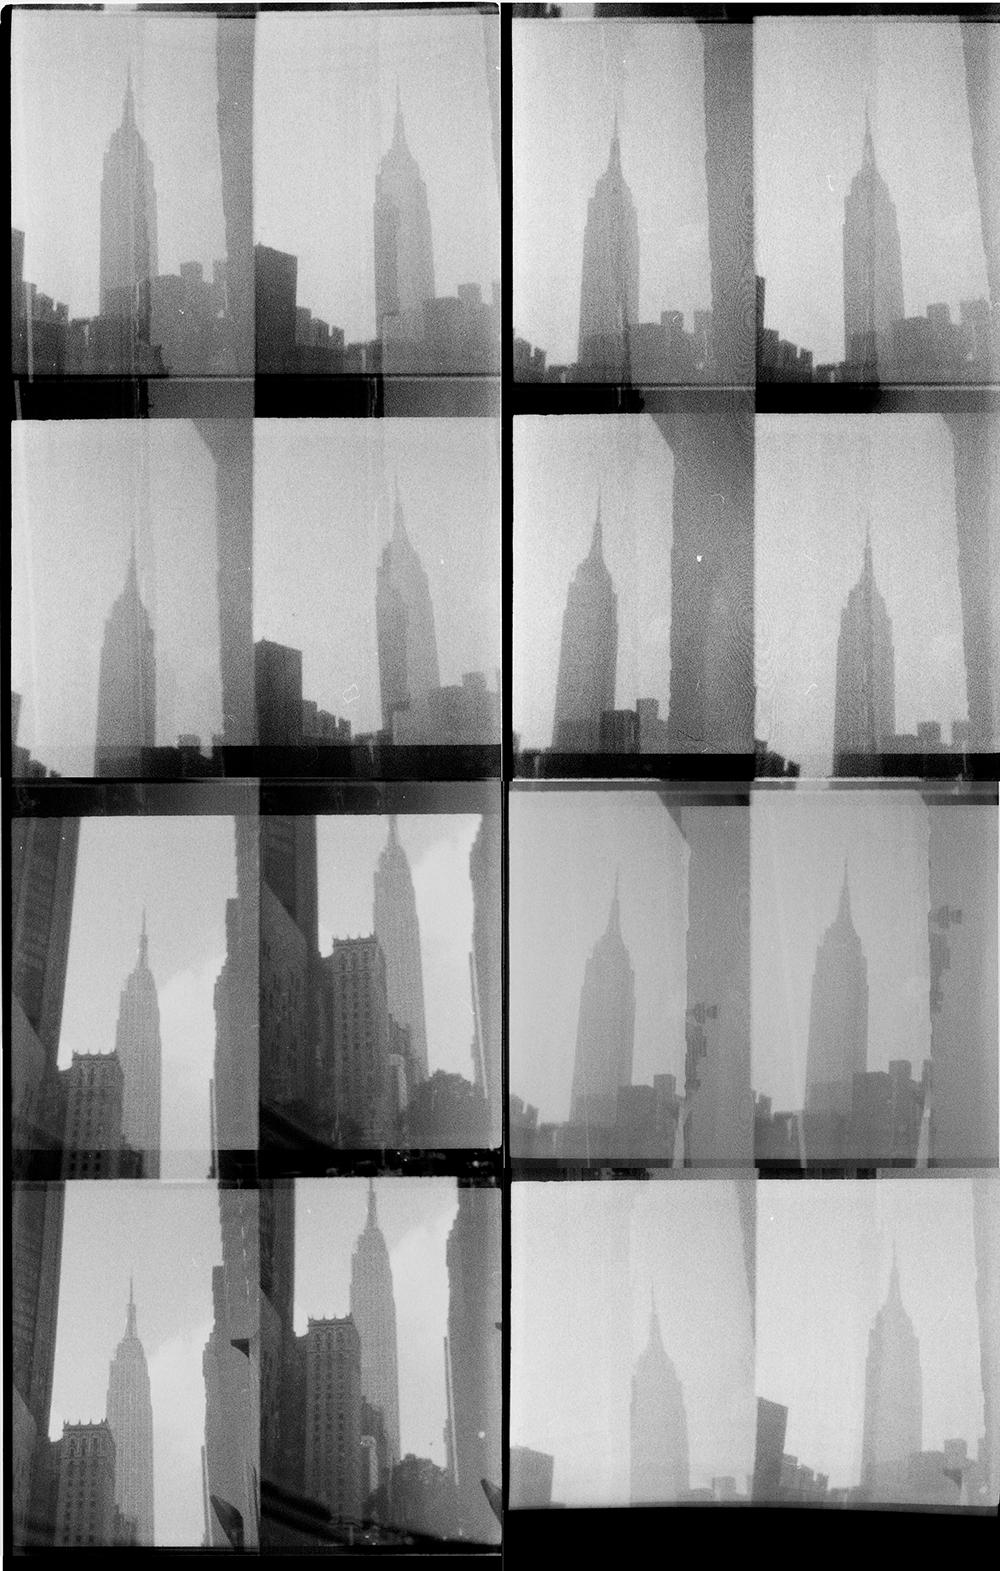 Stefanie Schneider Landscape Photograph - The Empire (Strange Love) - Empire State Building, New York, Landscape